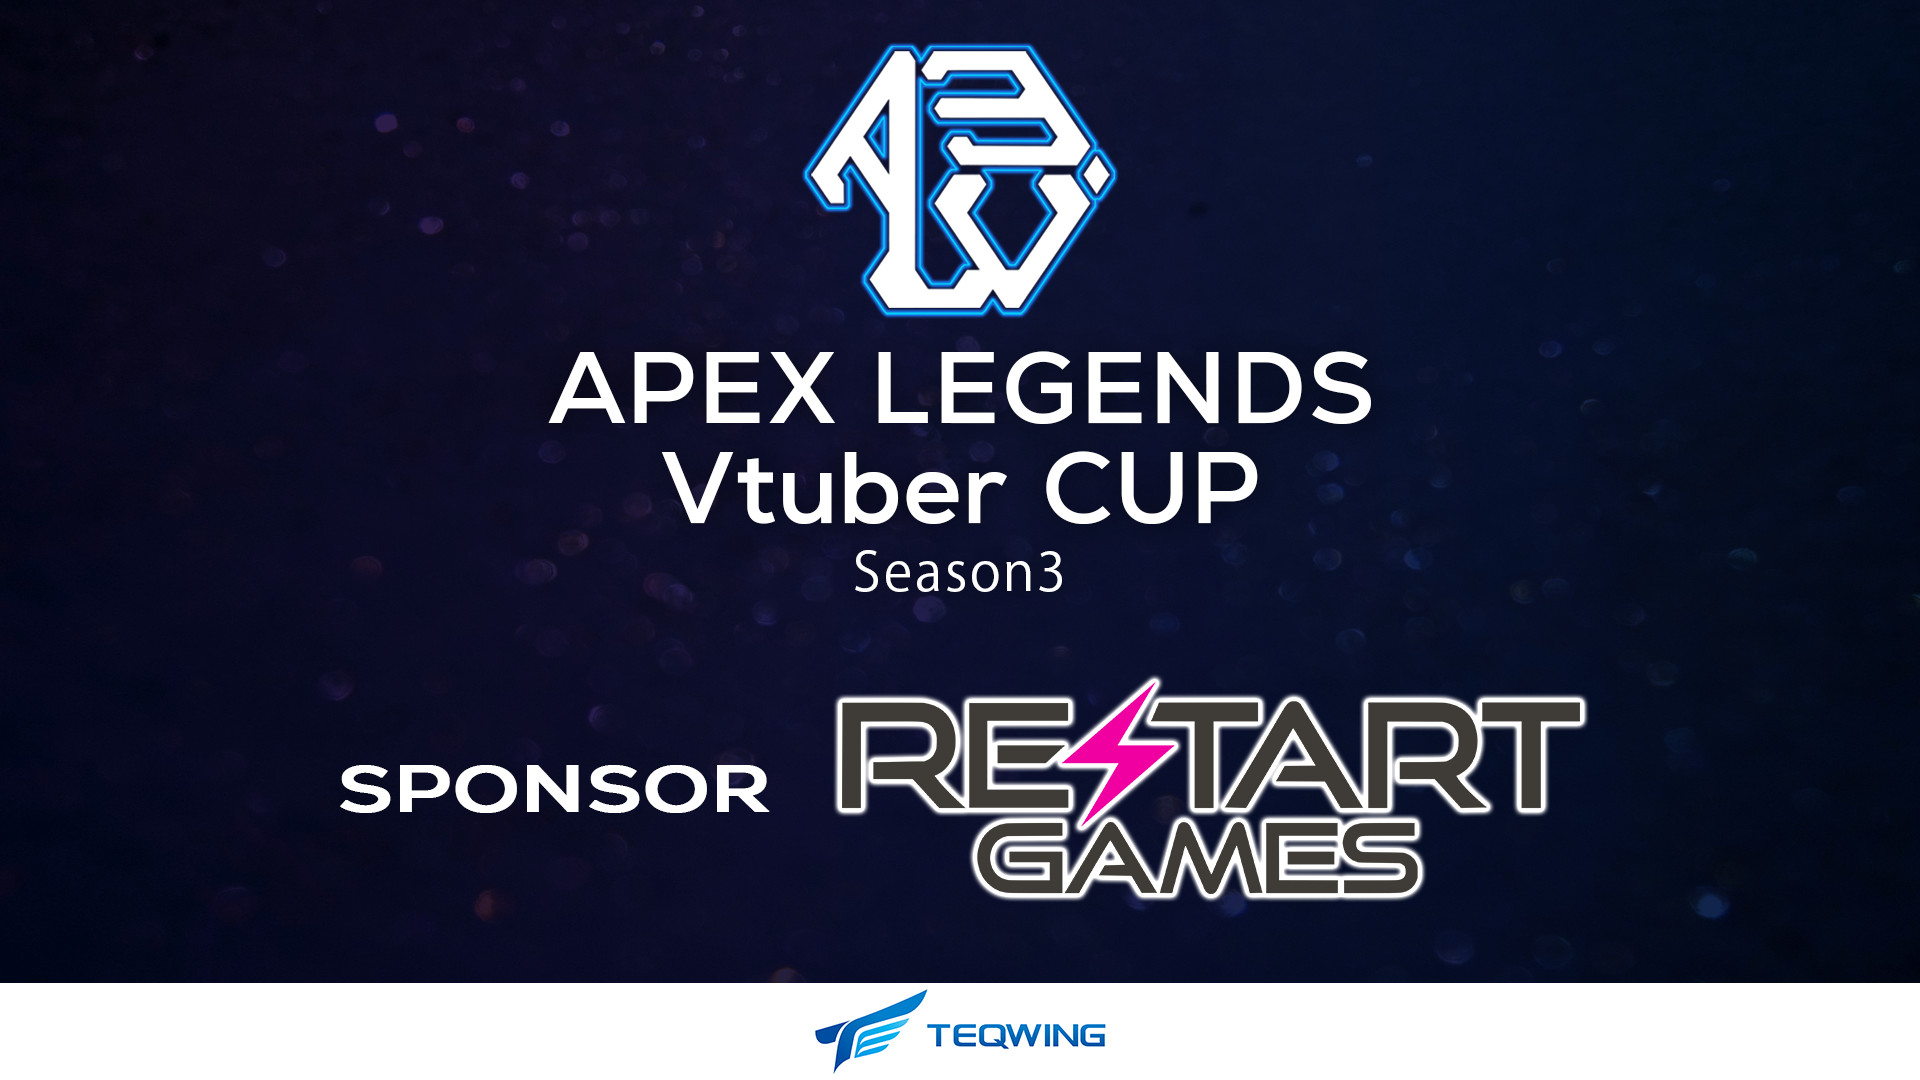 【大会情報】Apex Legends Vtuber Cup 本戦【2021年12月18日】